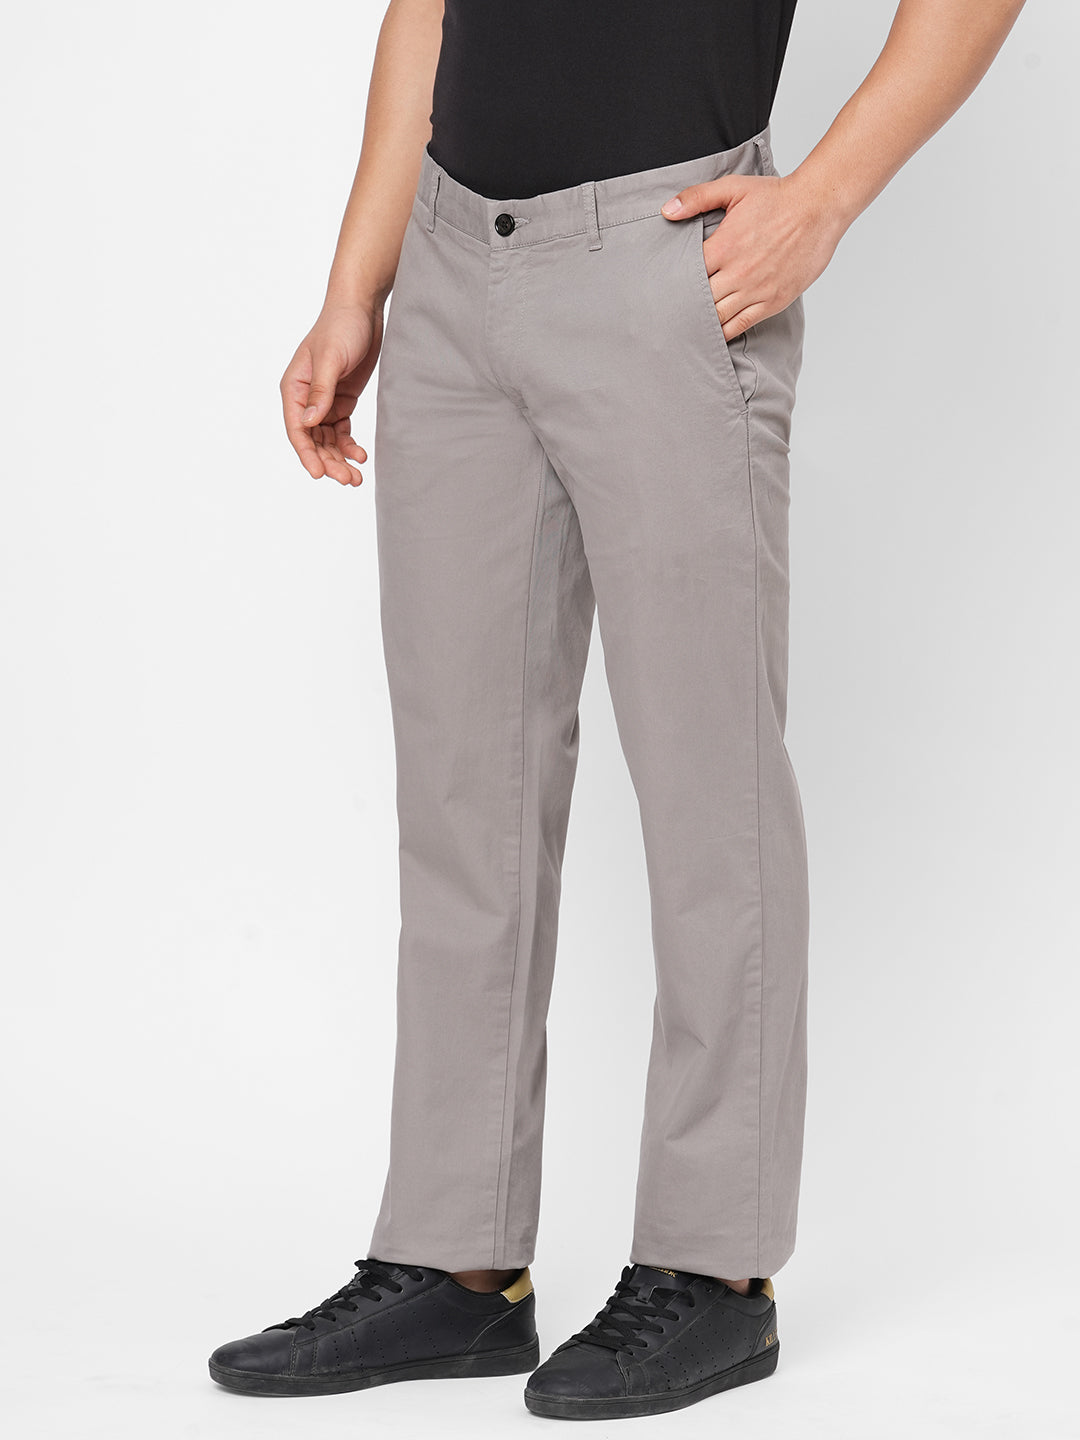 Men's Grey Cotton Lycra Regular Fit Pant